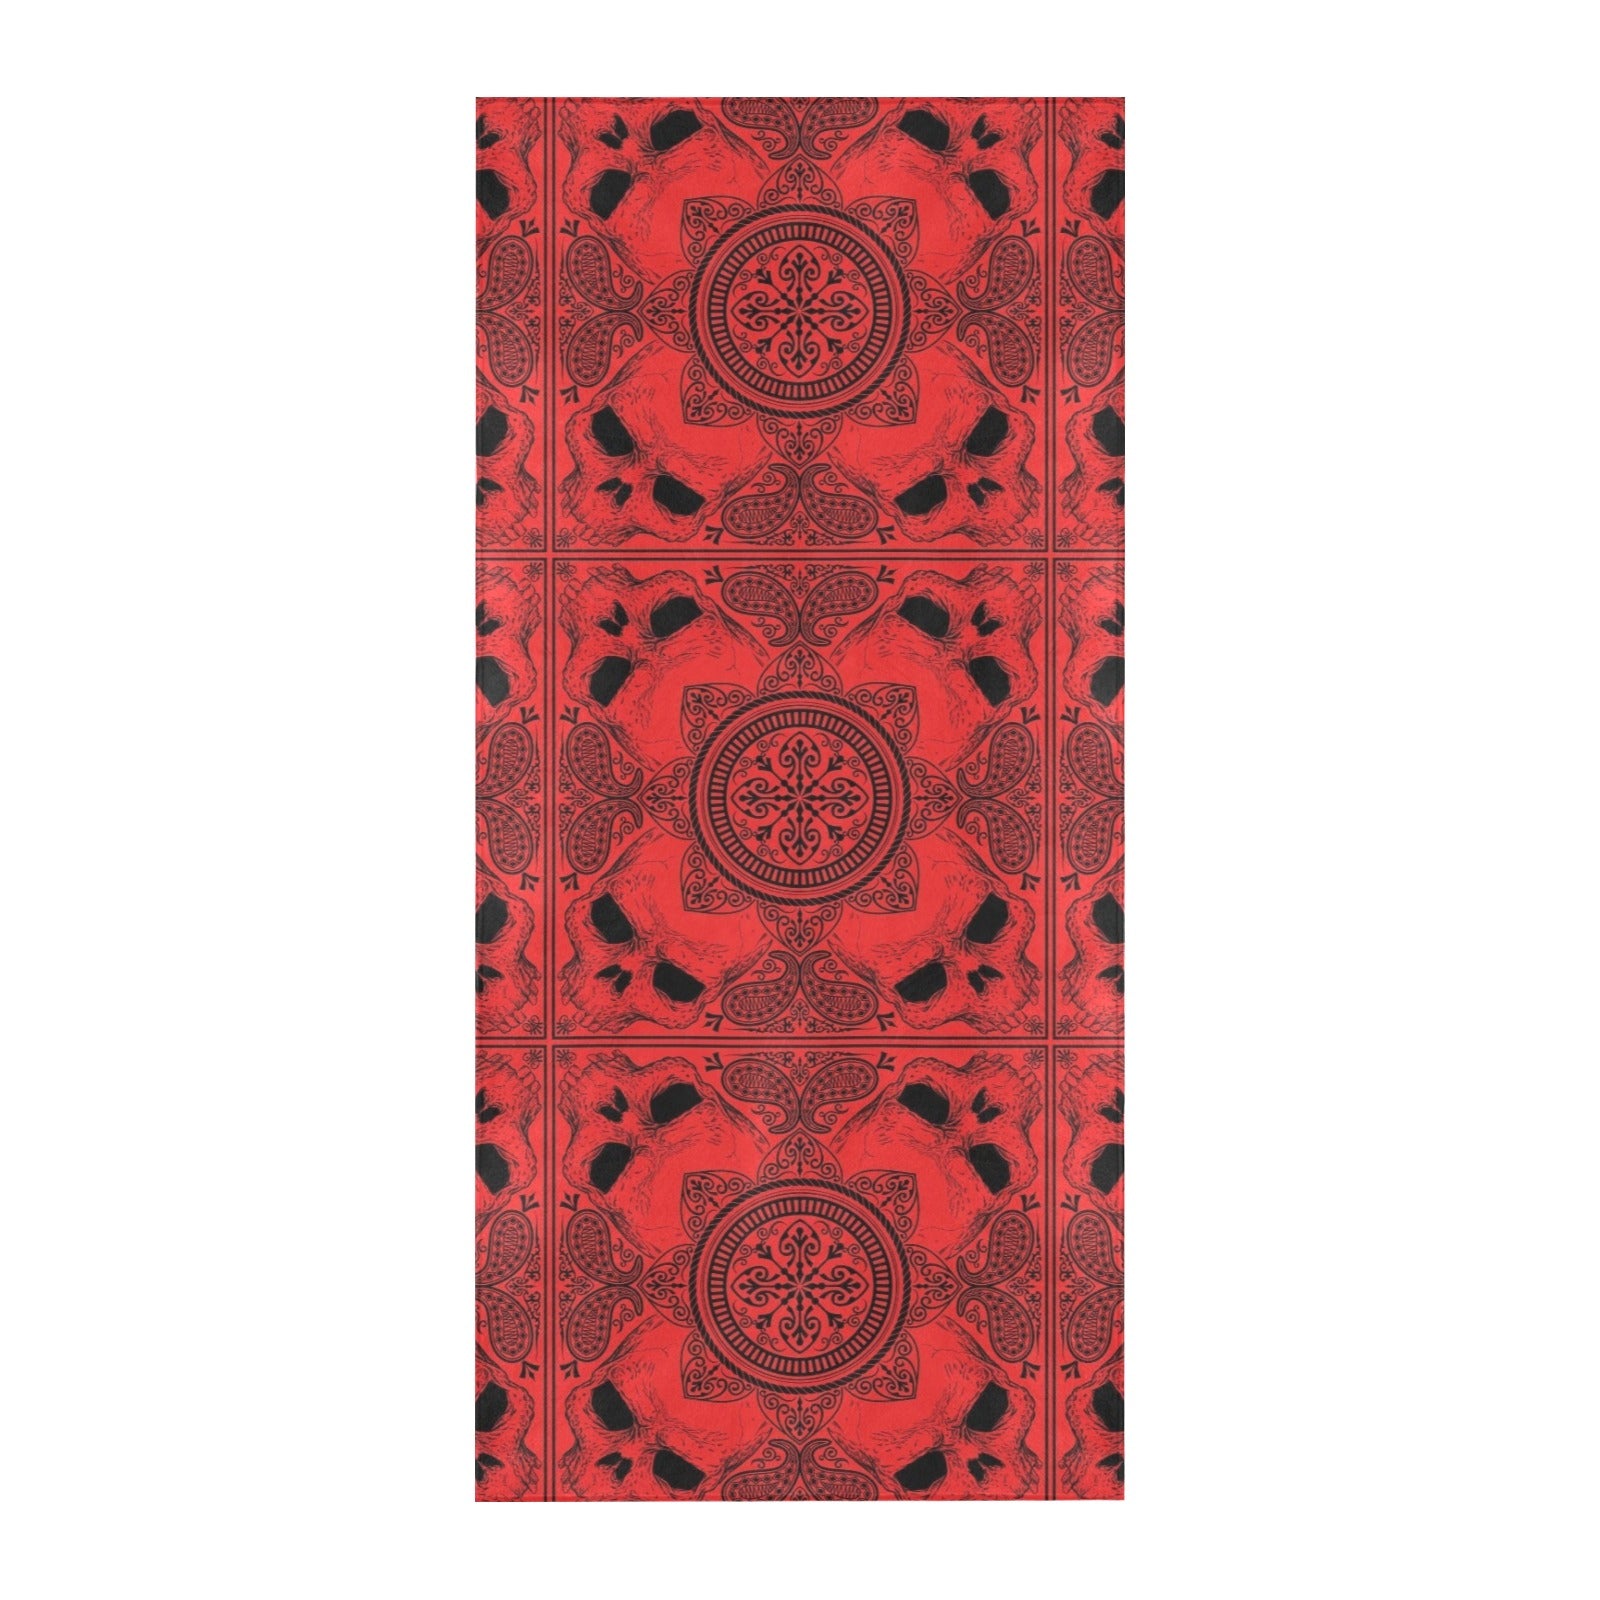 Bandana Red Print Design LKS304 Beach Towel 32" x 71"